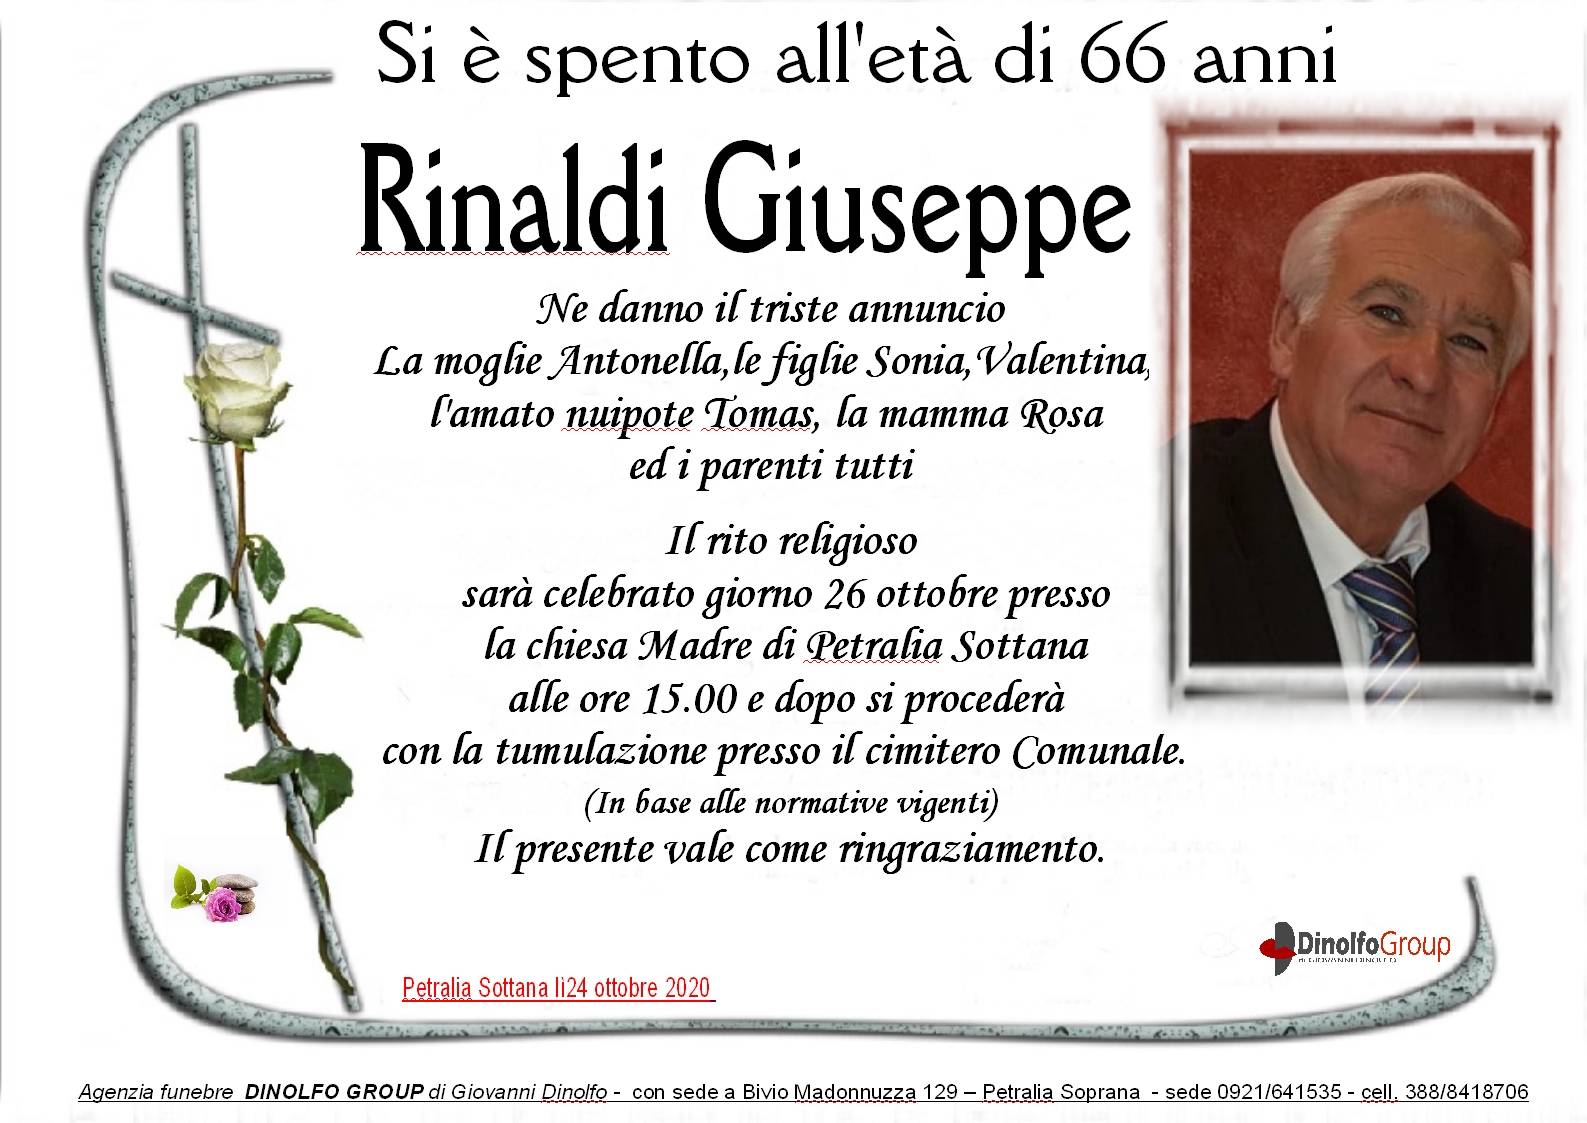 Giuseppe Rinaldi